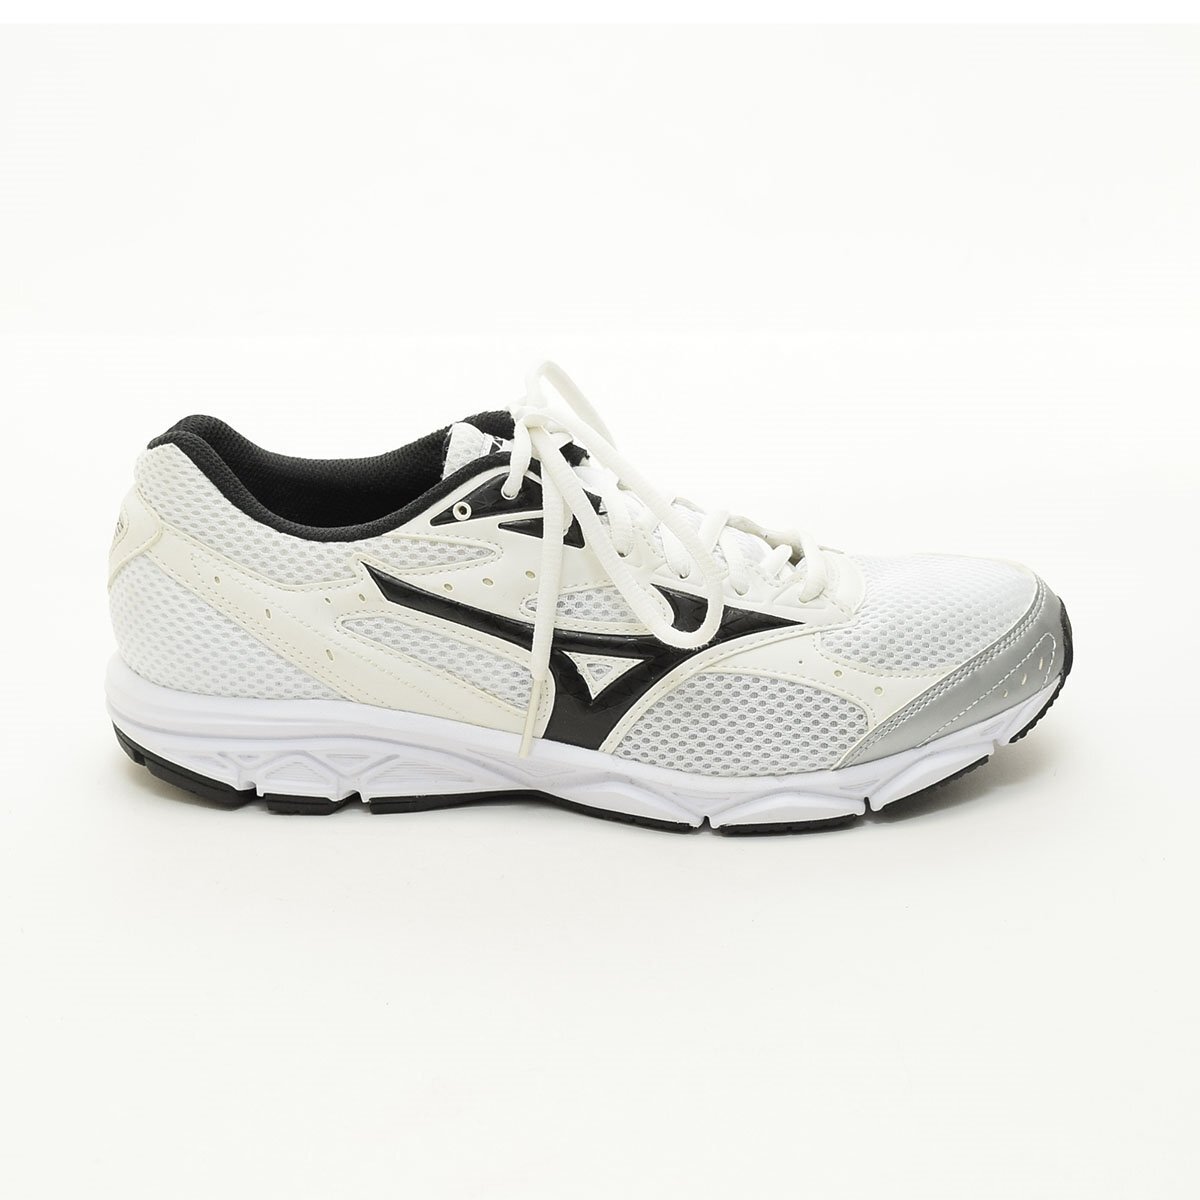 *507573 Mizuno Mizuno * running shoes Maxima i The -20jo silver g sport shoes sneakers size 27.0cm men's white black 